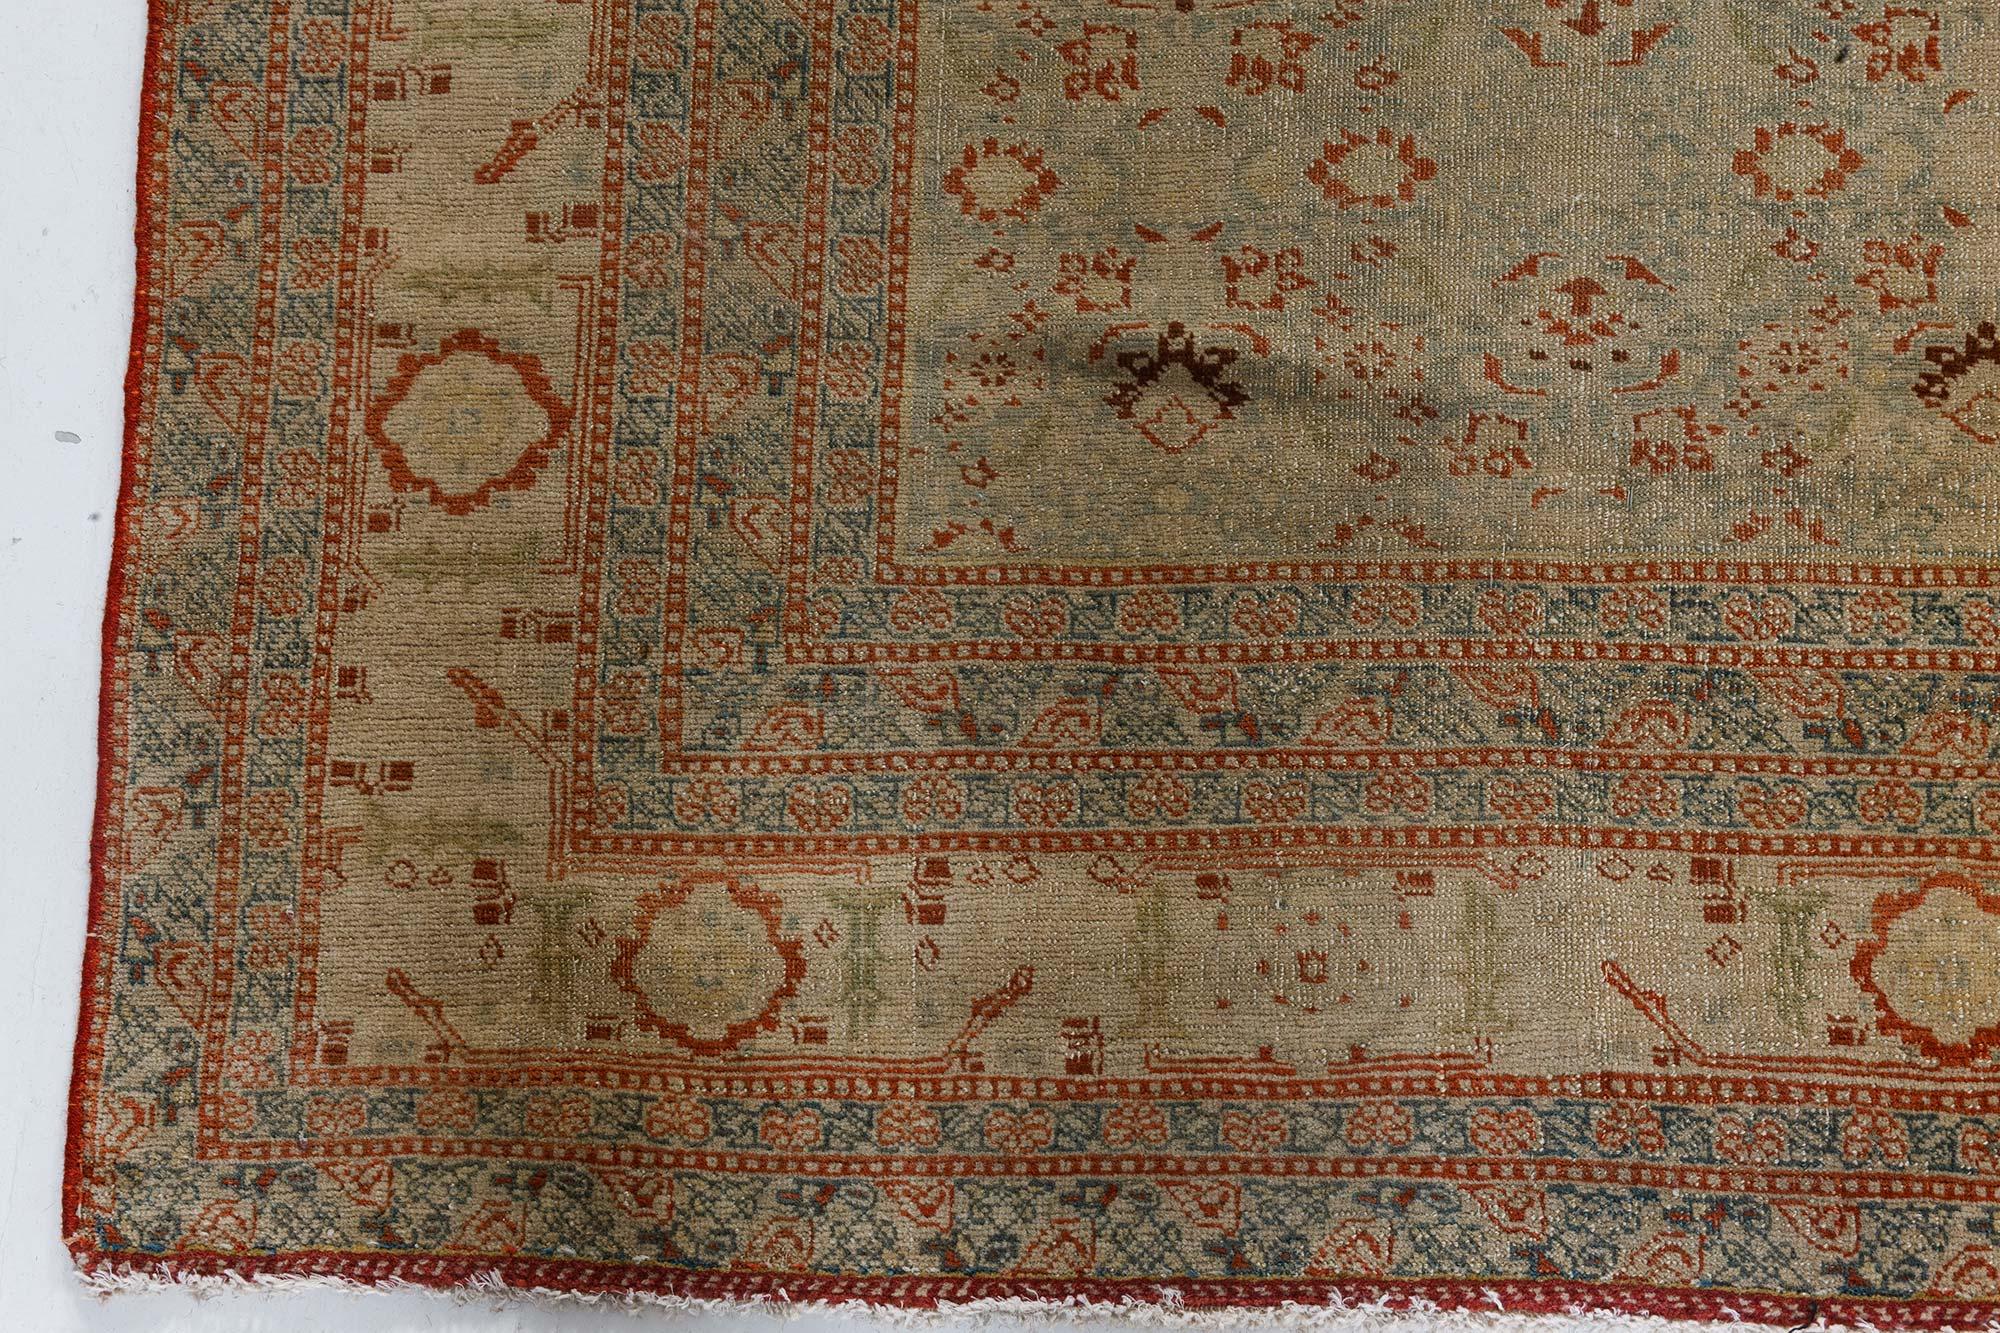 Authentic 19th century Persian Tabriz handmade wool rug
Size: 7'0